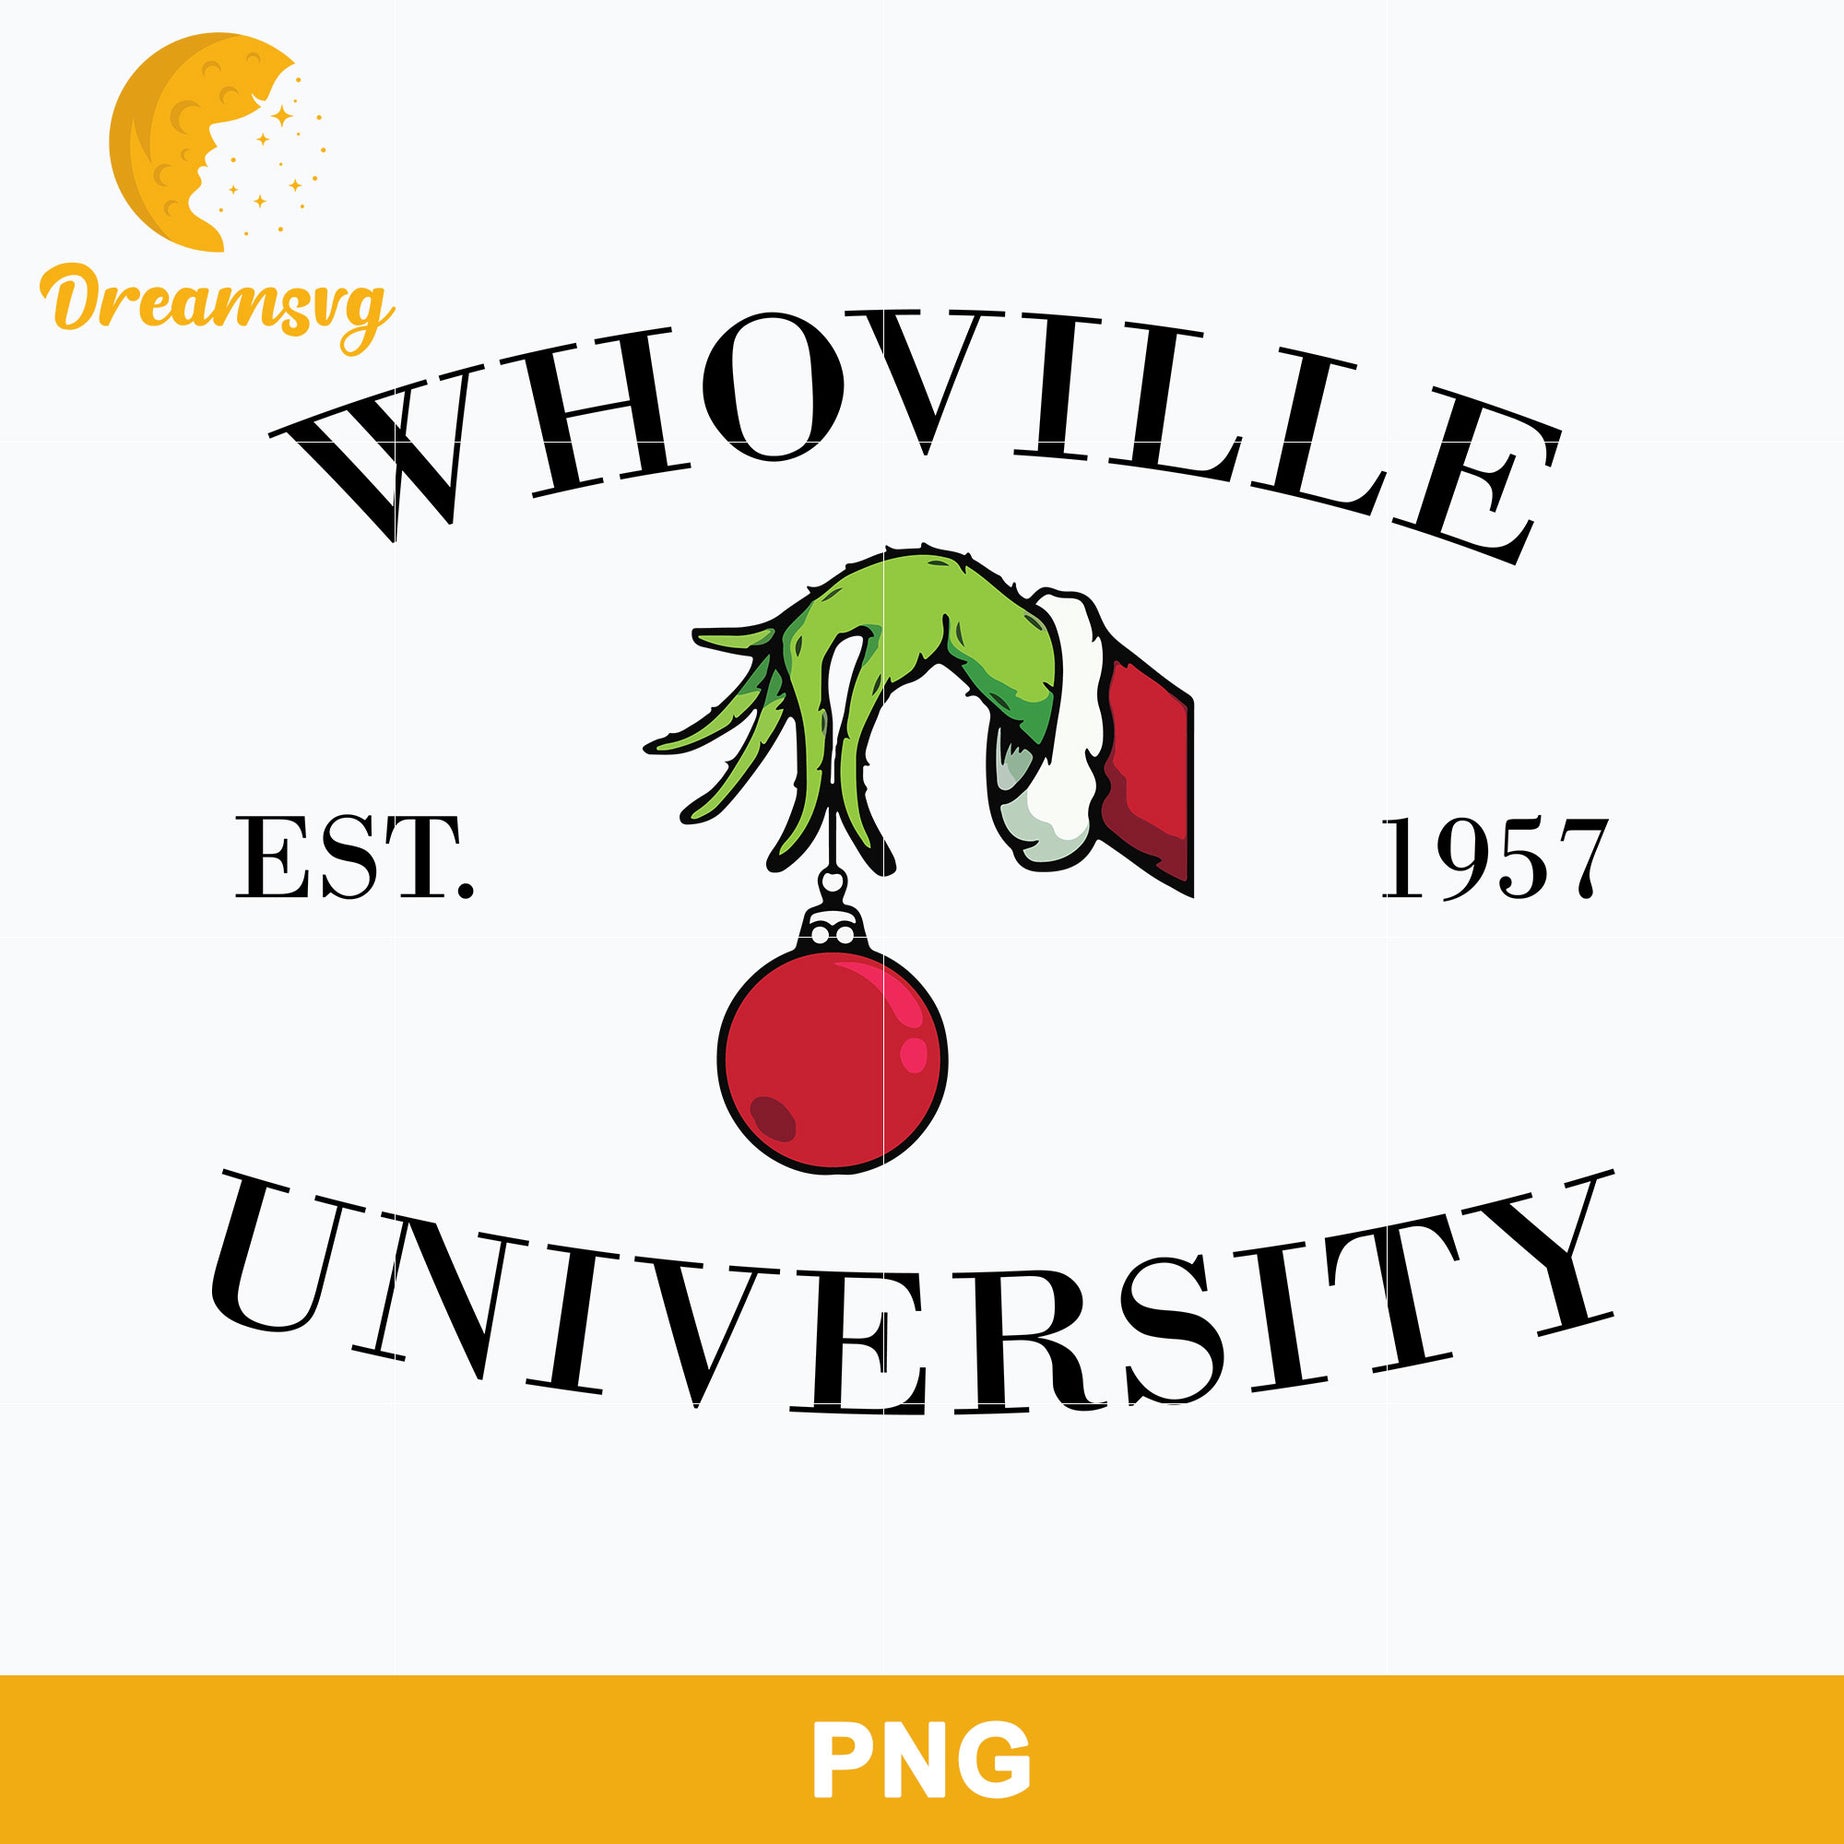 Whovilie University EST. 1957 PNG, Grinch Christmas PNG